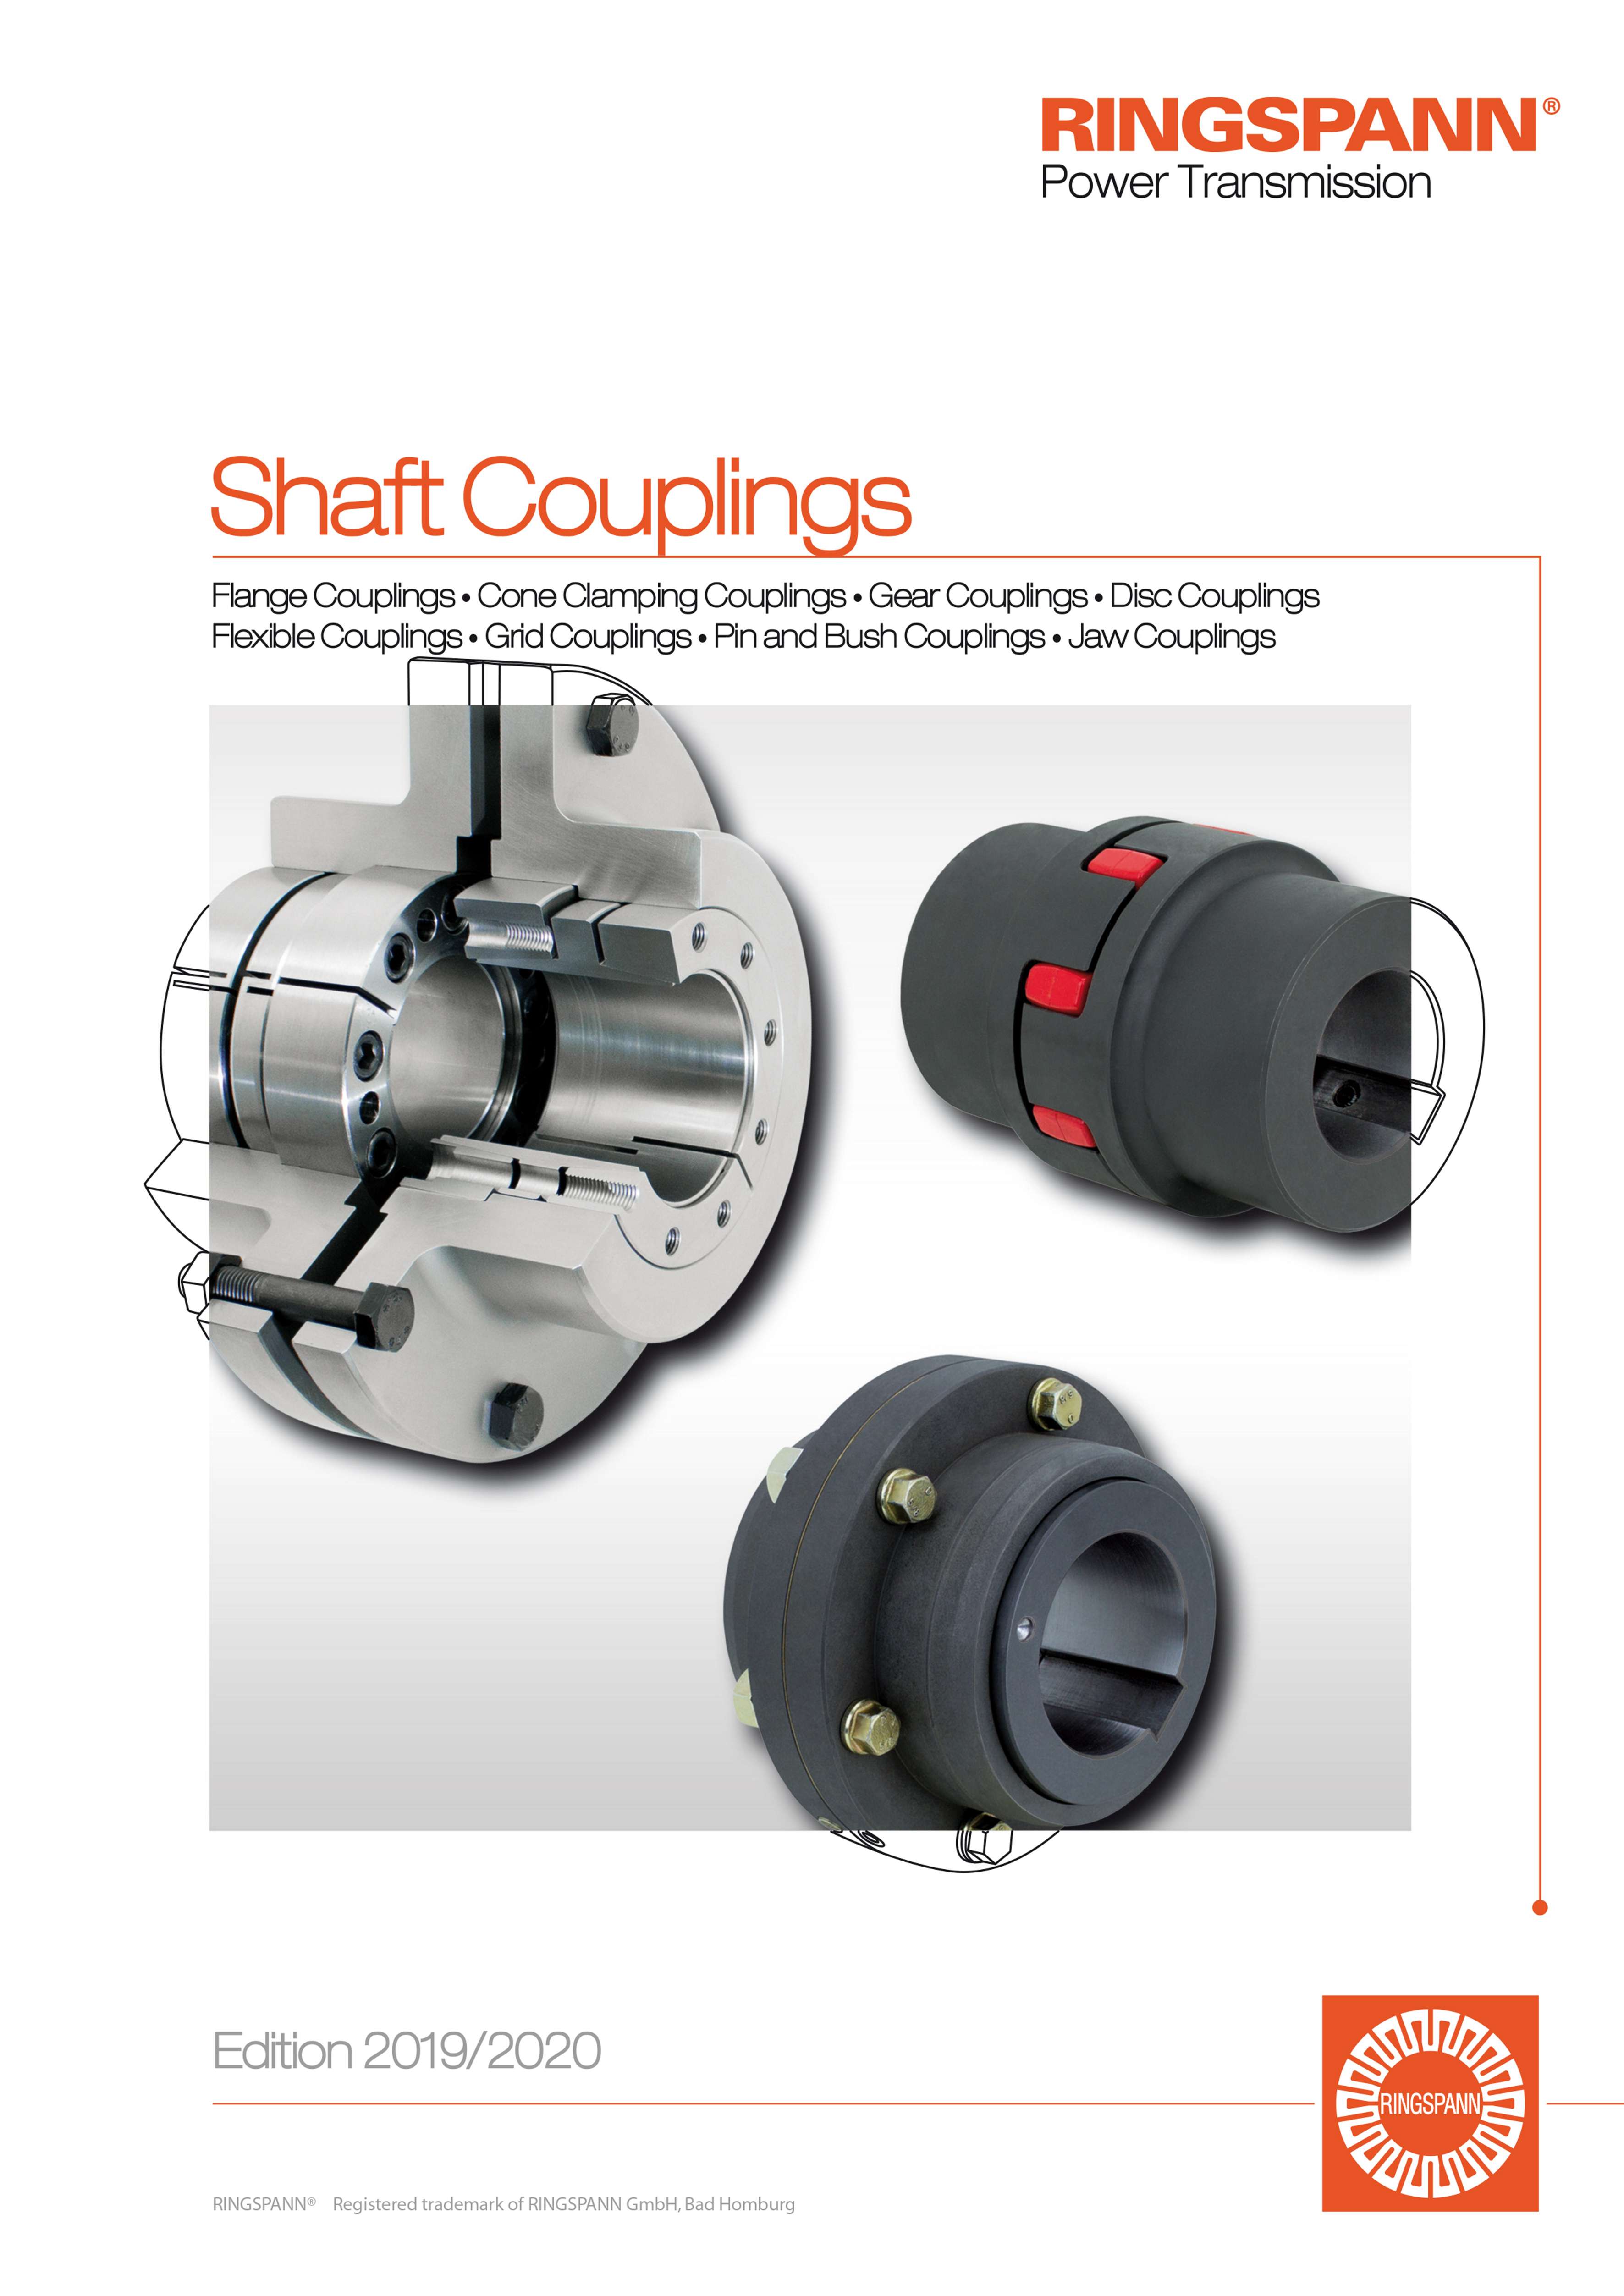 RINGSPANN product catalogue – shaft couplings